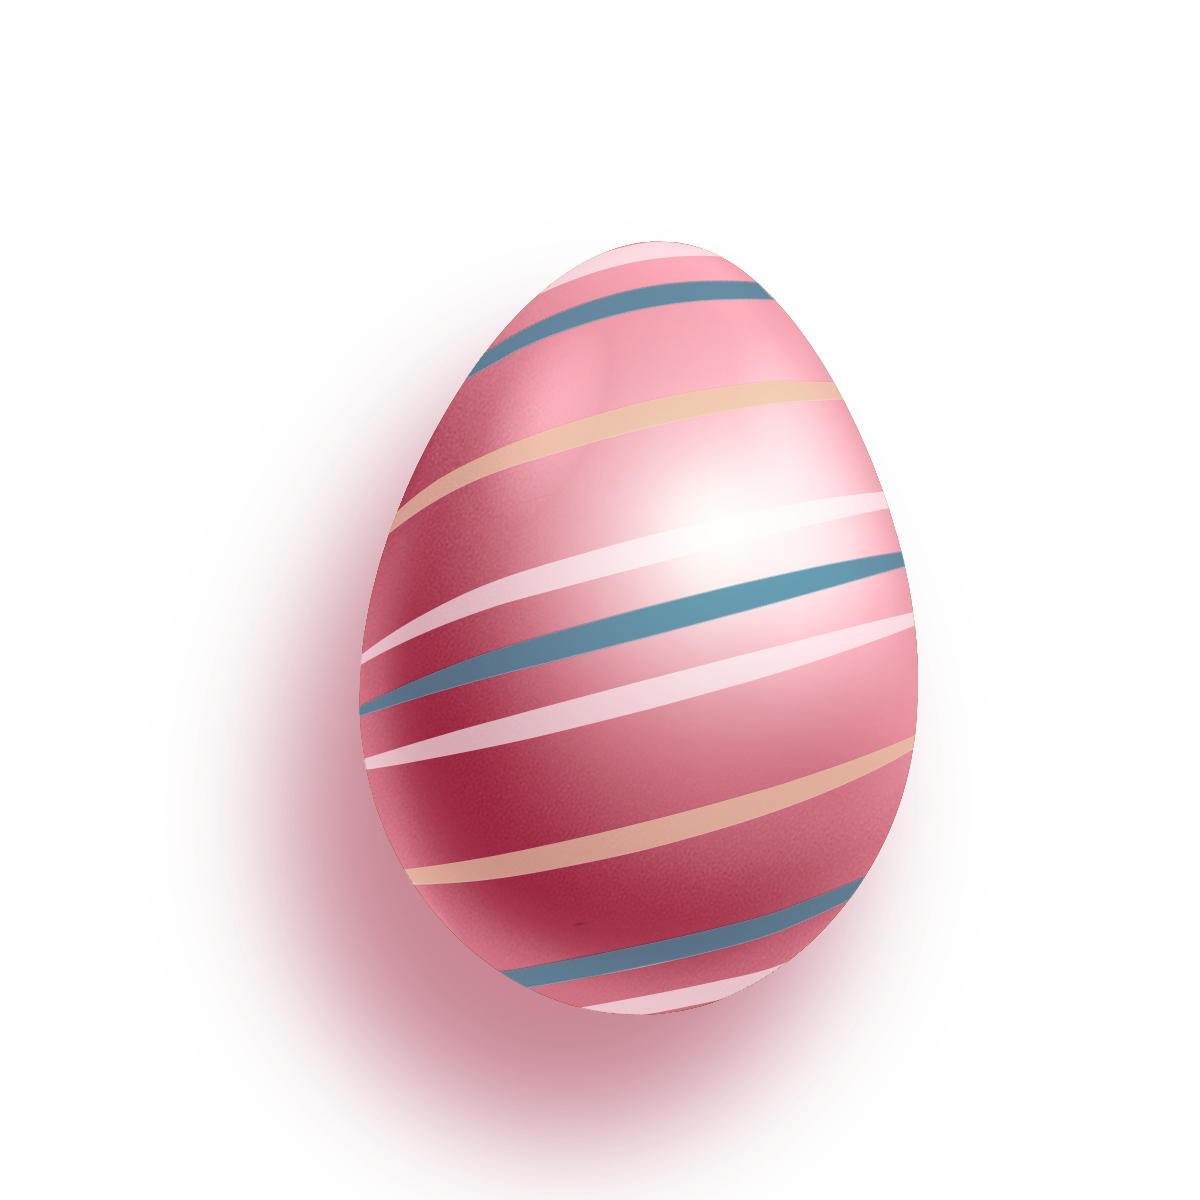 egg PNG transparent image download, size: 435x600px